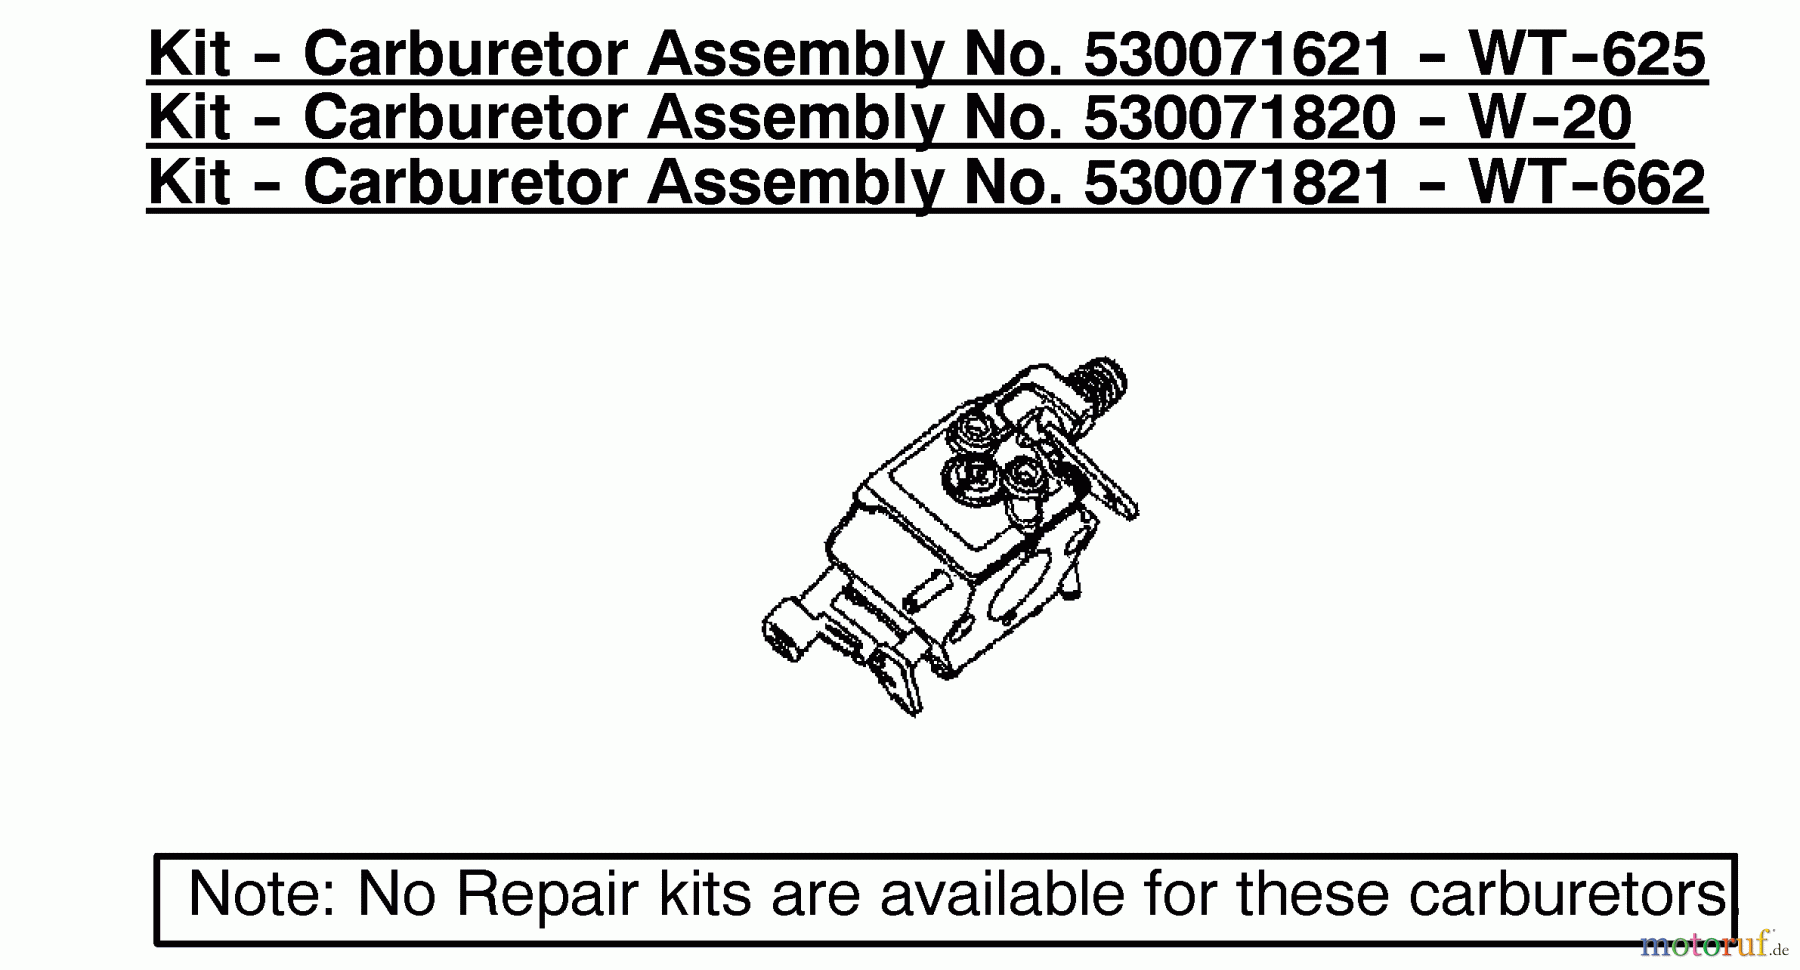  Poulan / Weed Eater Motorsägen 2550 (Type 6) - Poulan Woodmaster Chainsaw Kit - Carburetor Assembly 530071621/530071820/530071821